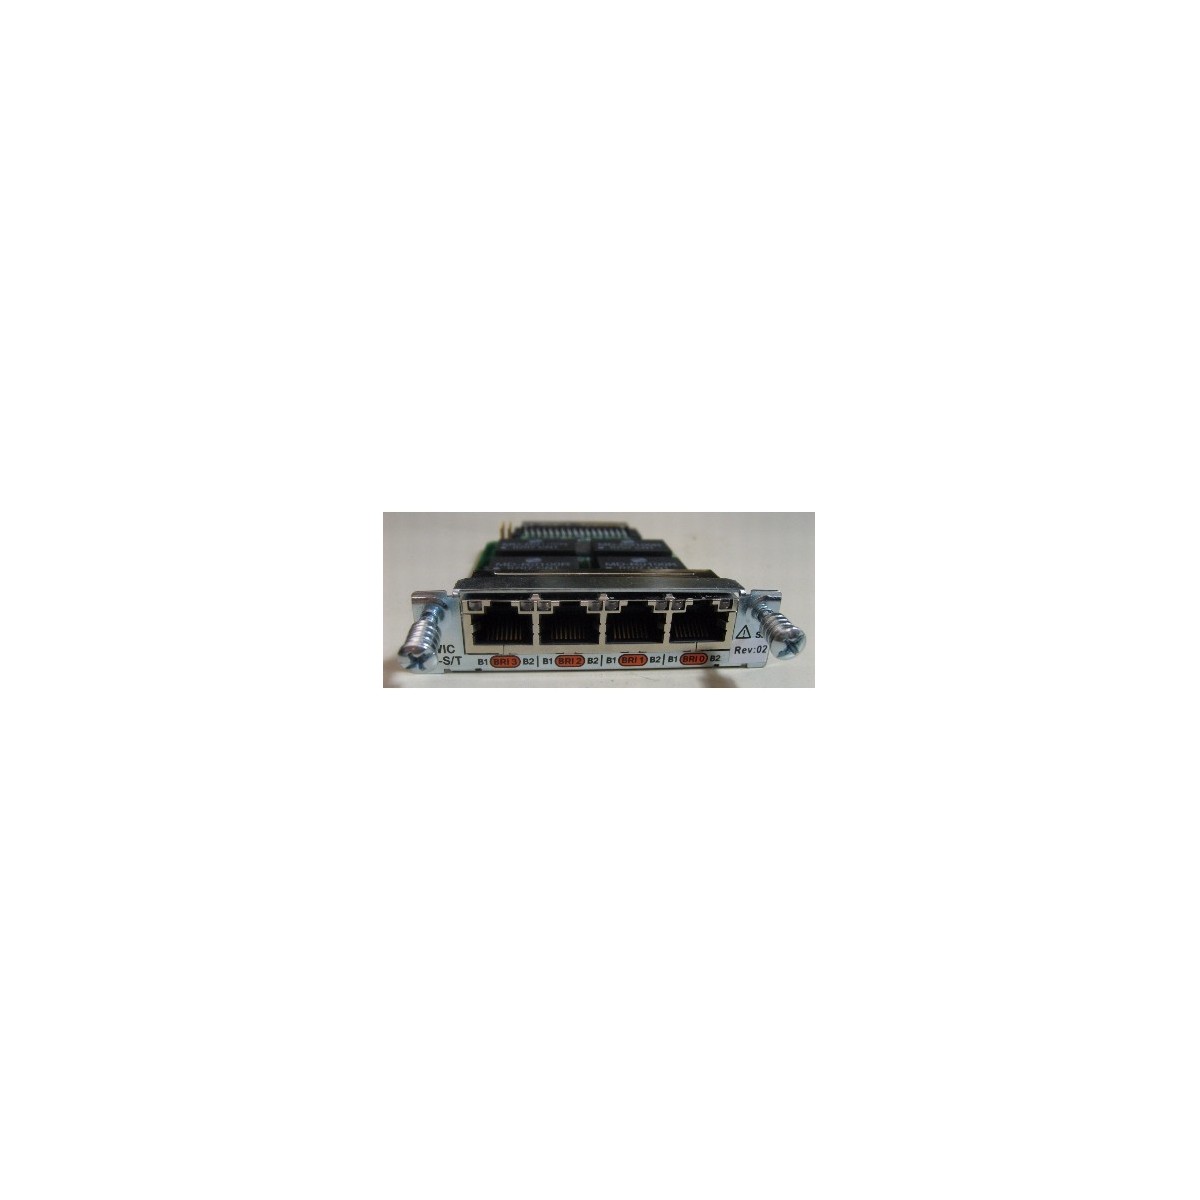 Cisco 4-Port ISDN BRI S-T High-Speed WAN Interface Card - Internal - Wired - RJ-45